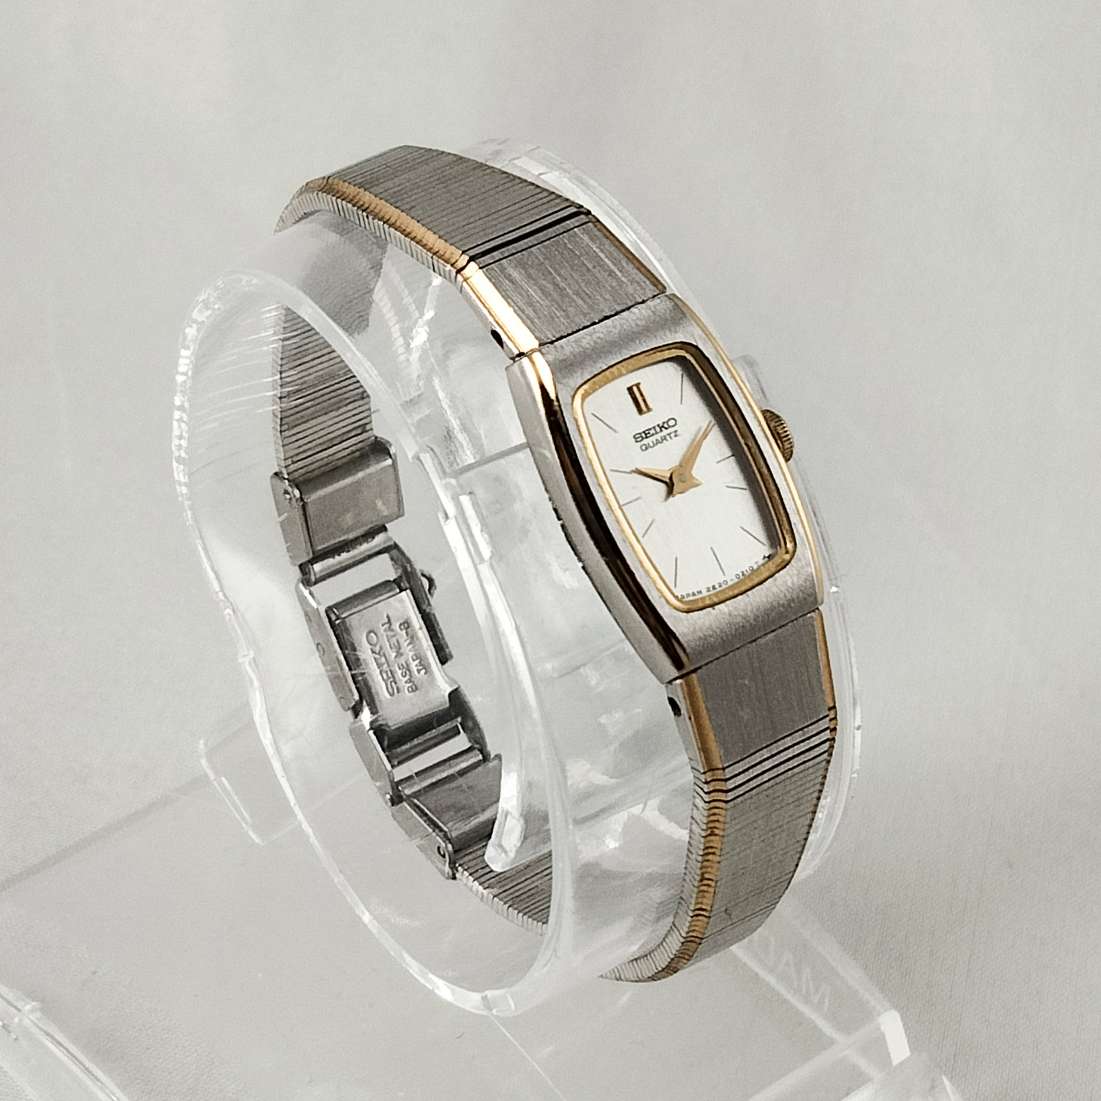 Seiko Petite Quartz Watch, Silver and Gold Tone